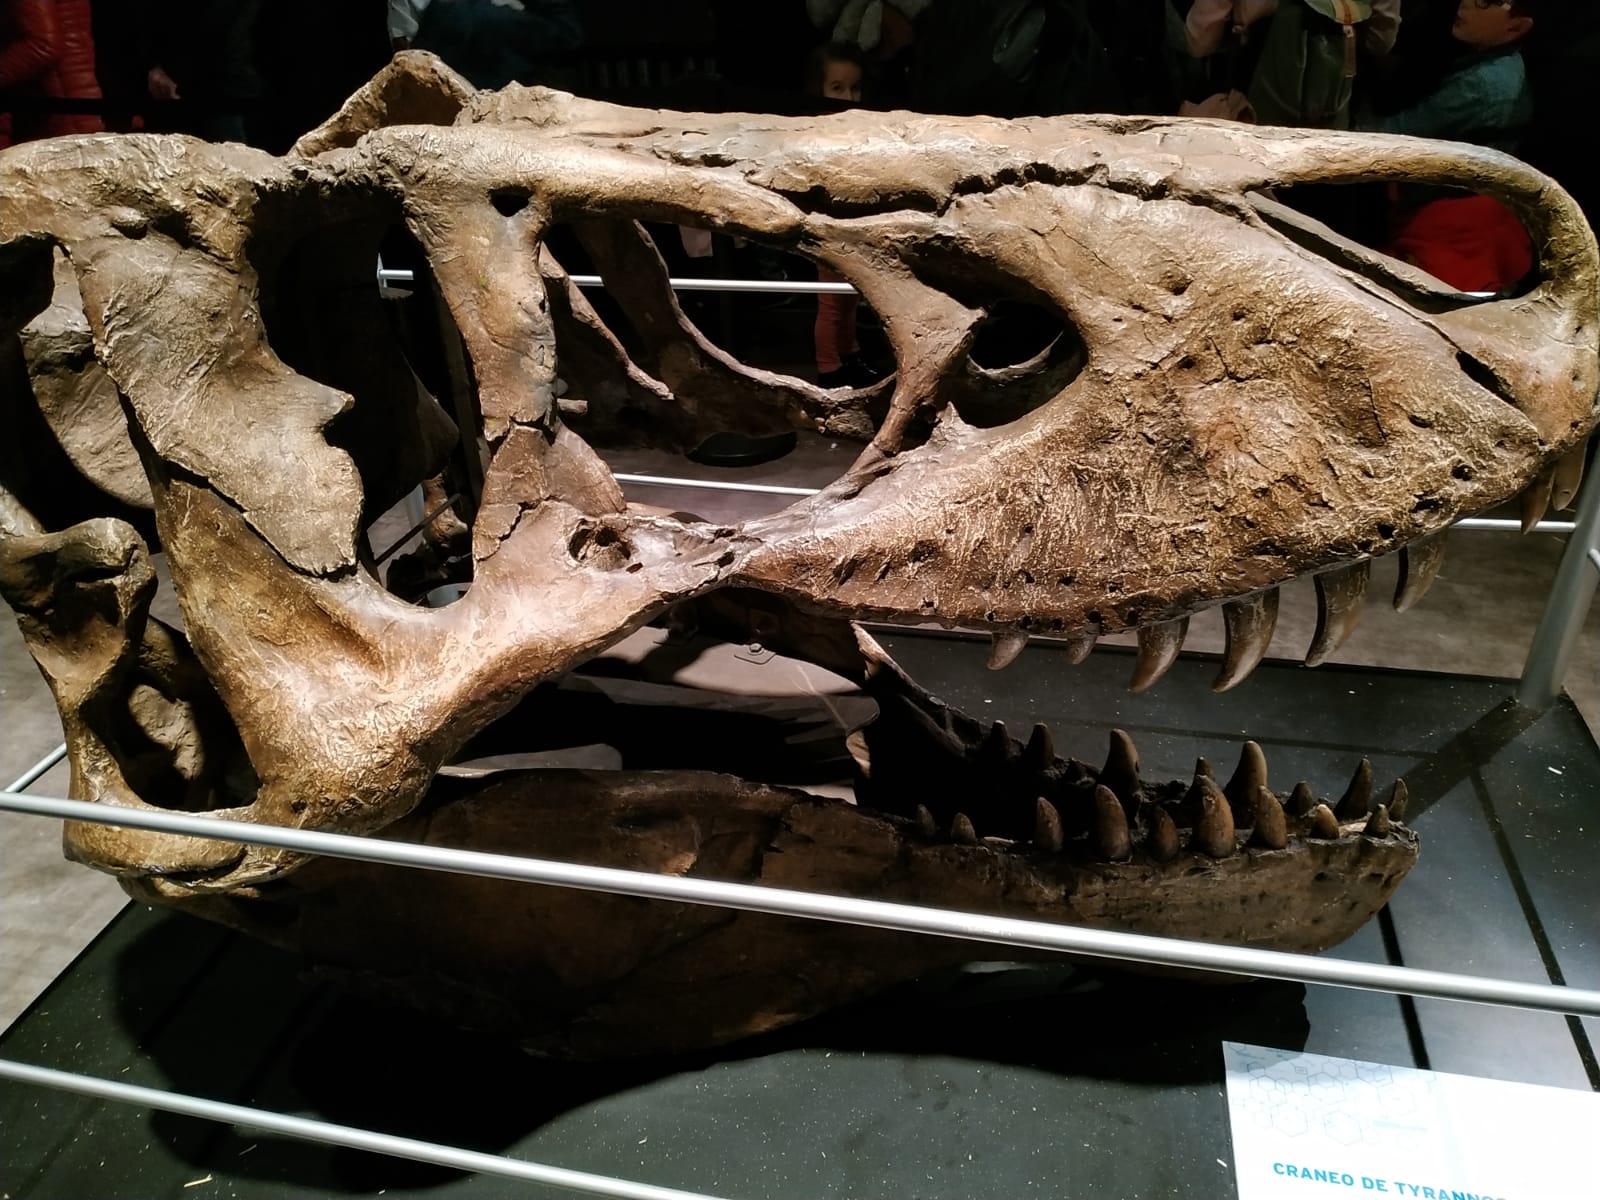 IMG 20190203 WA0023 - Visita a Jurassic World Exhibition en Madrid